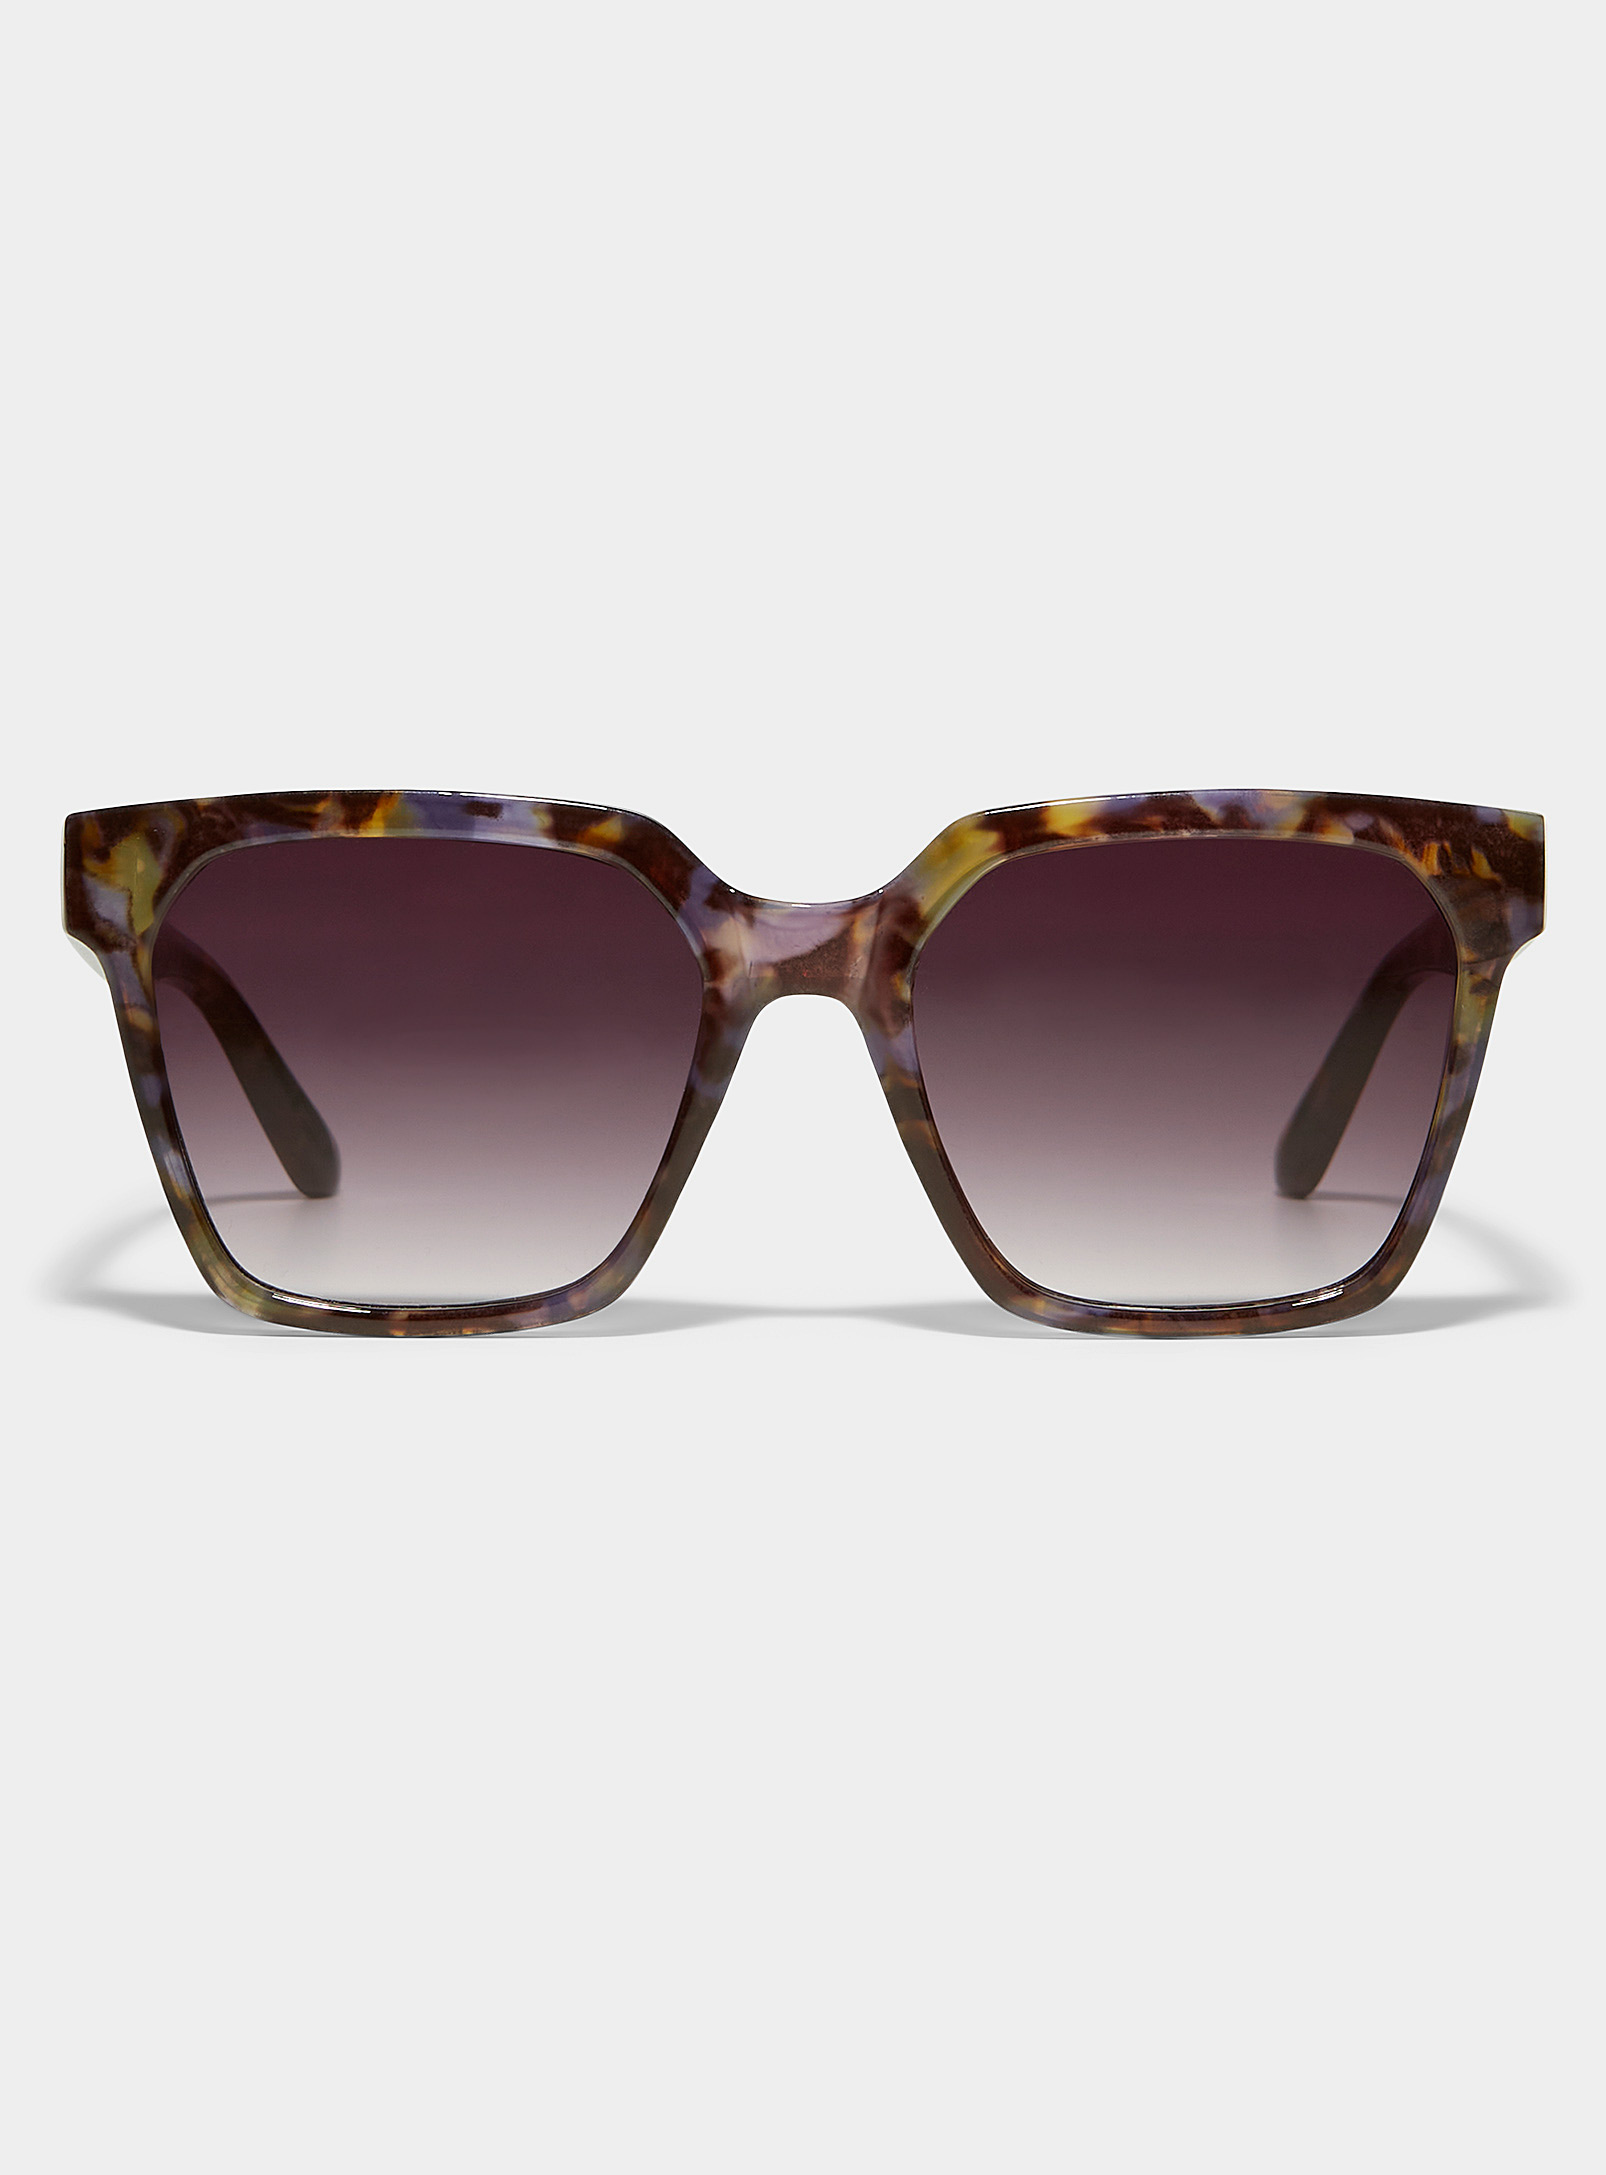 Simons - Women's Ruby square sunglasses